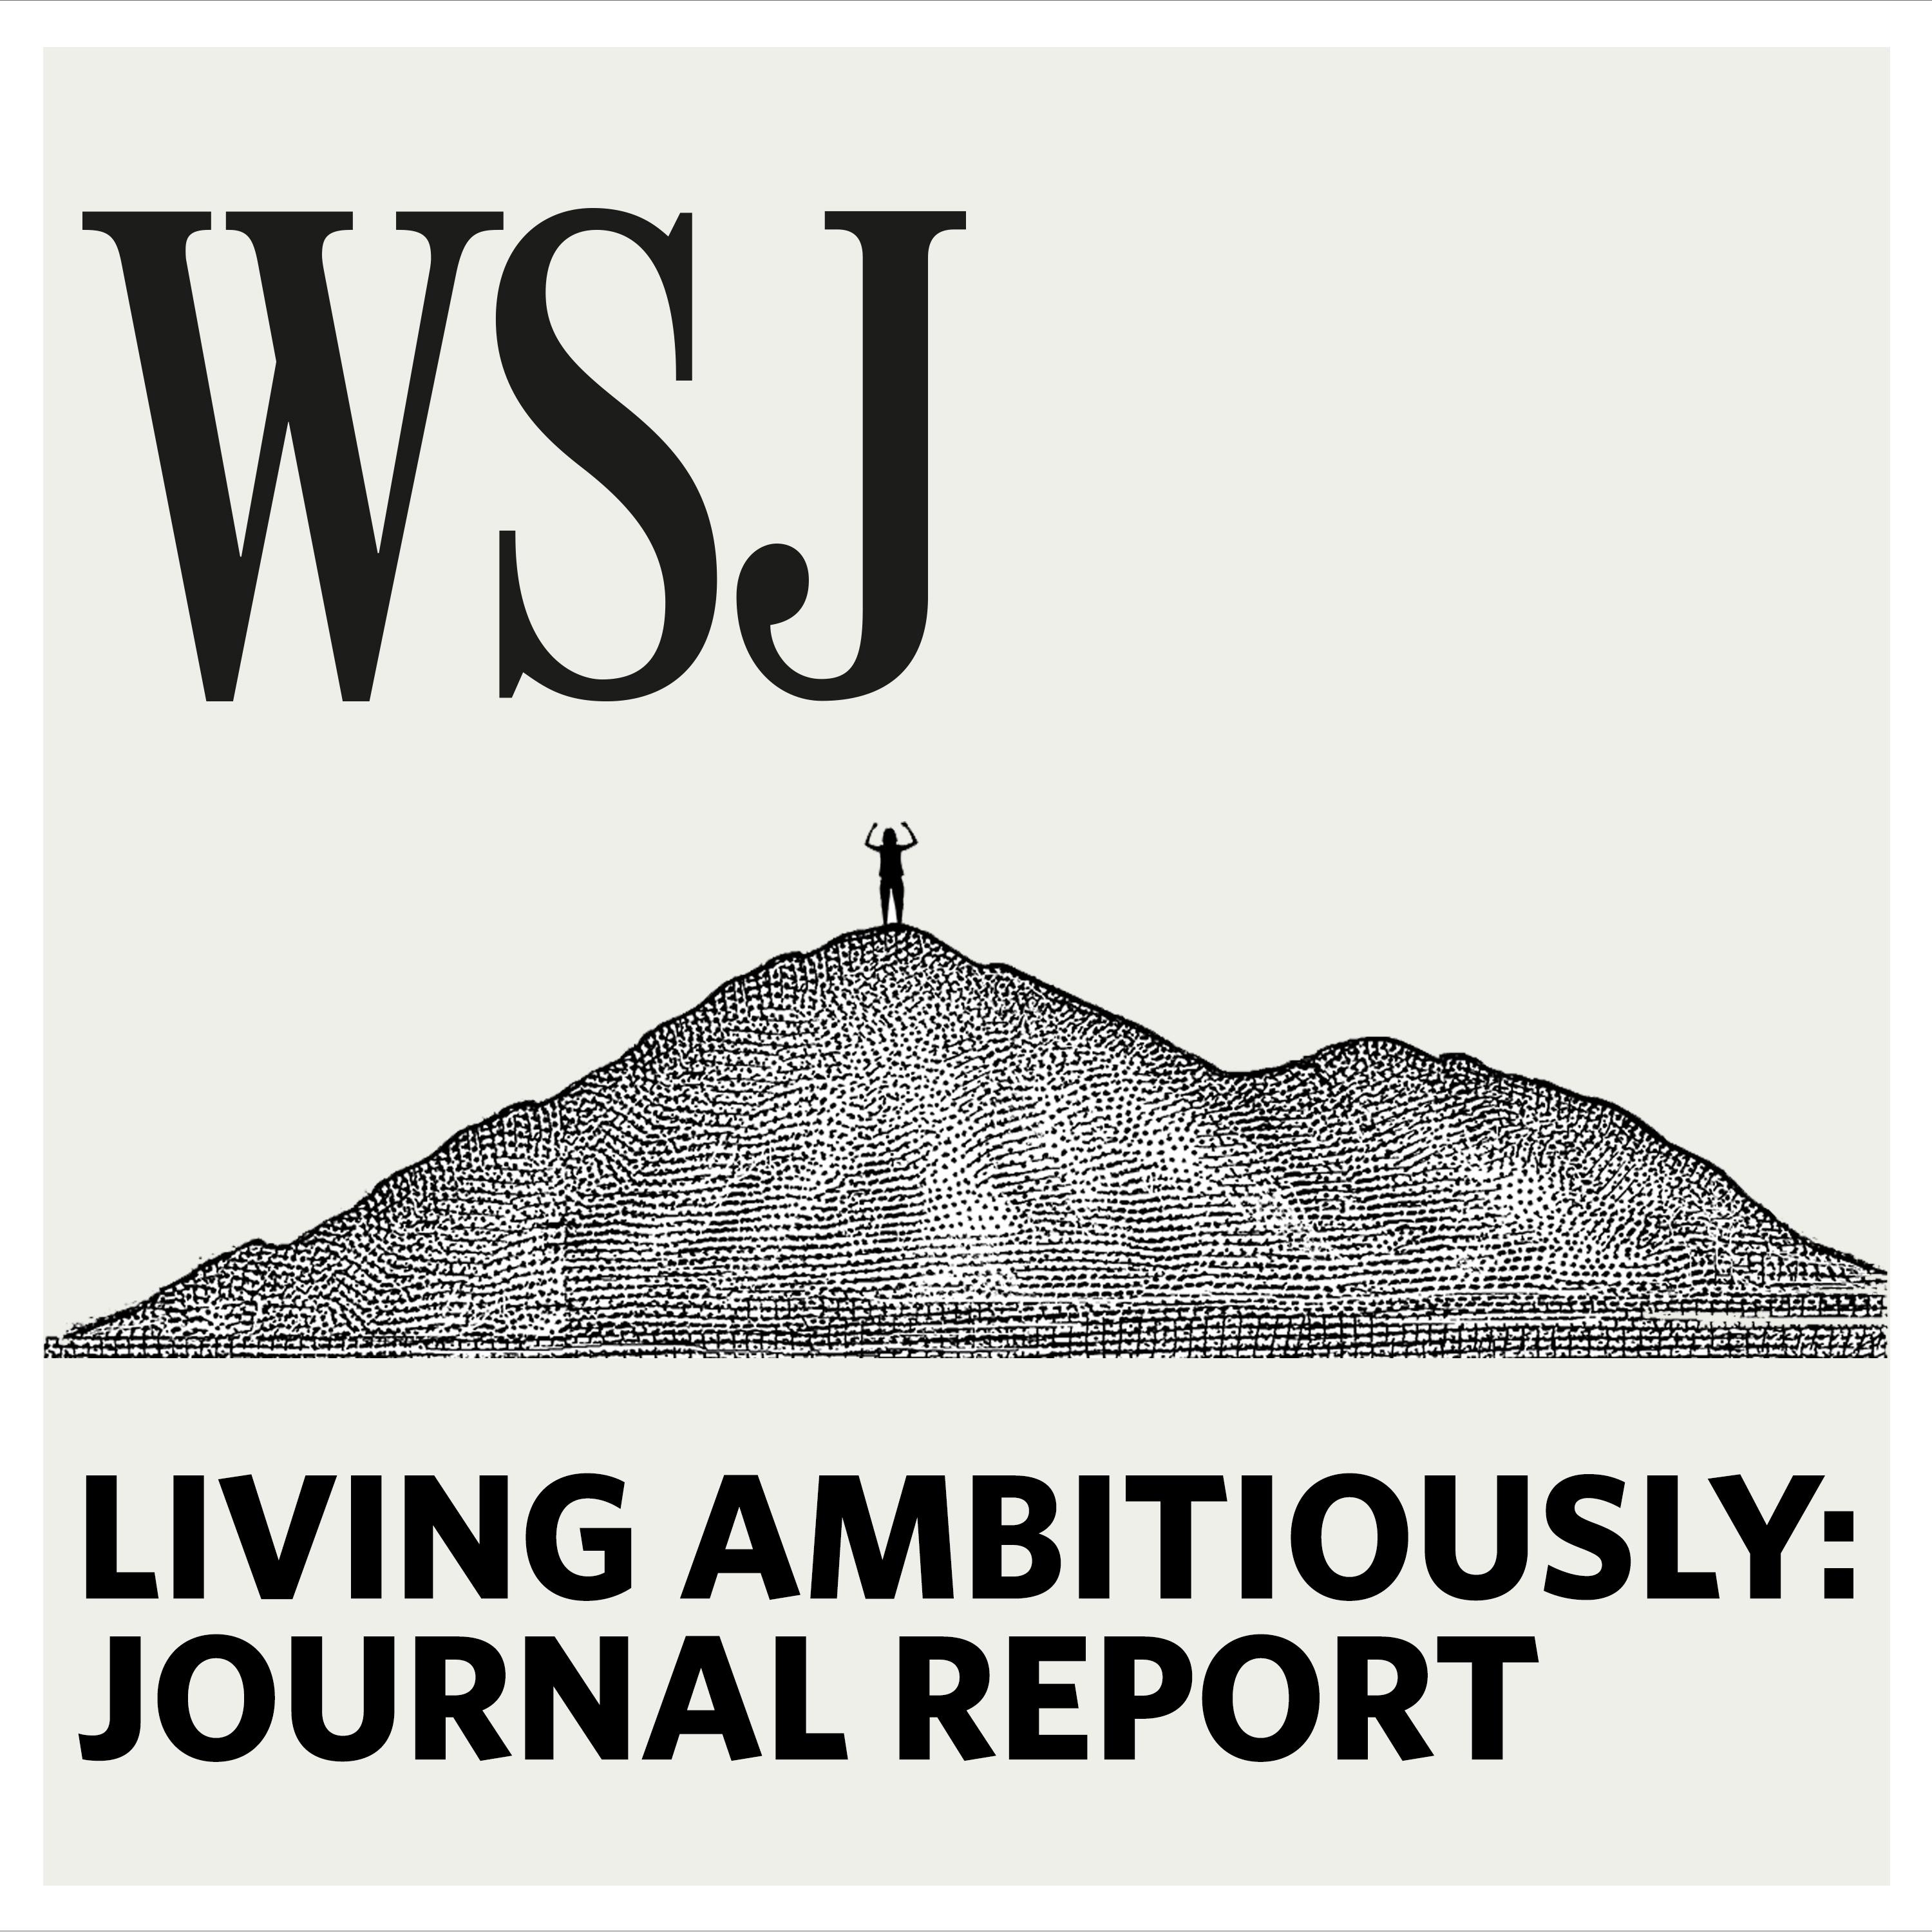 WSJ Journal Report